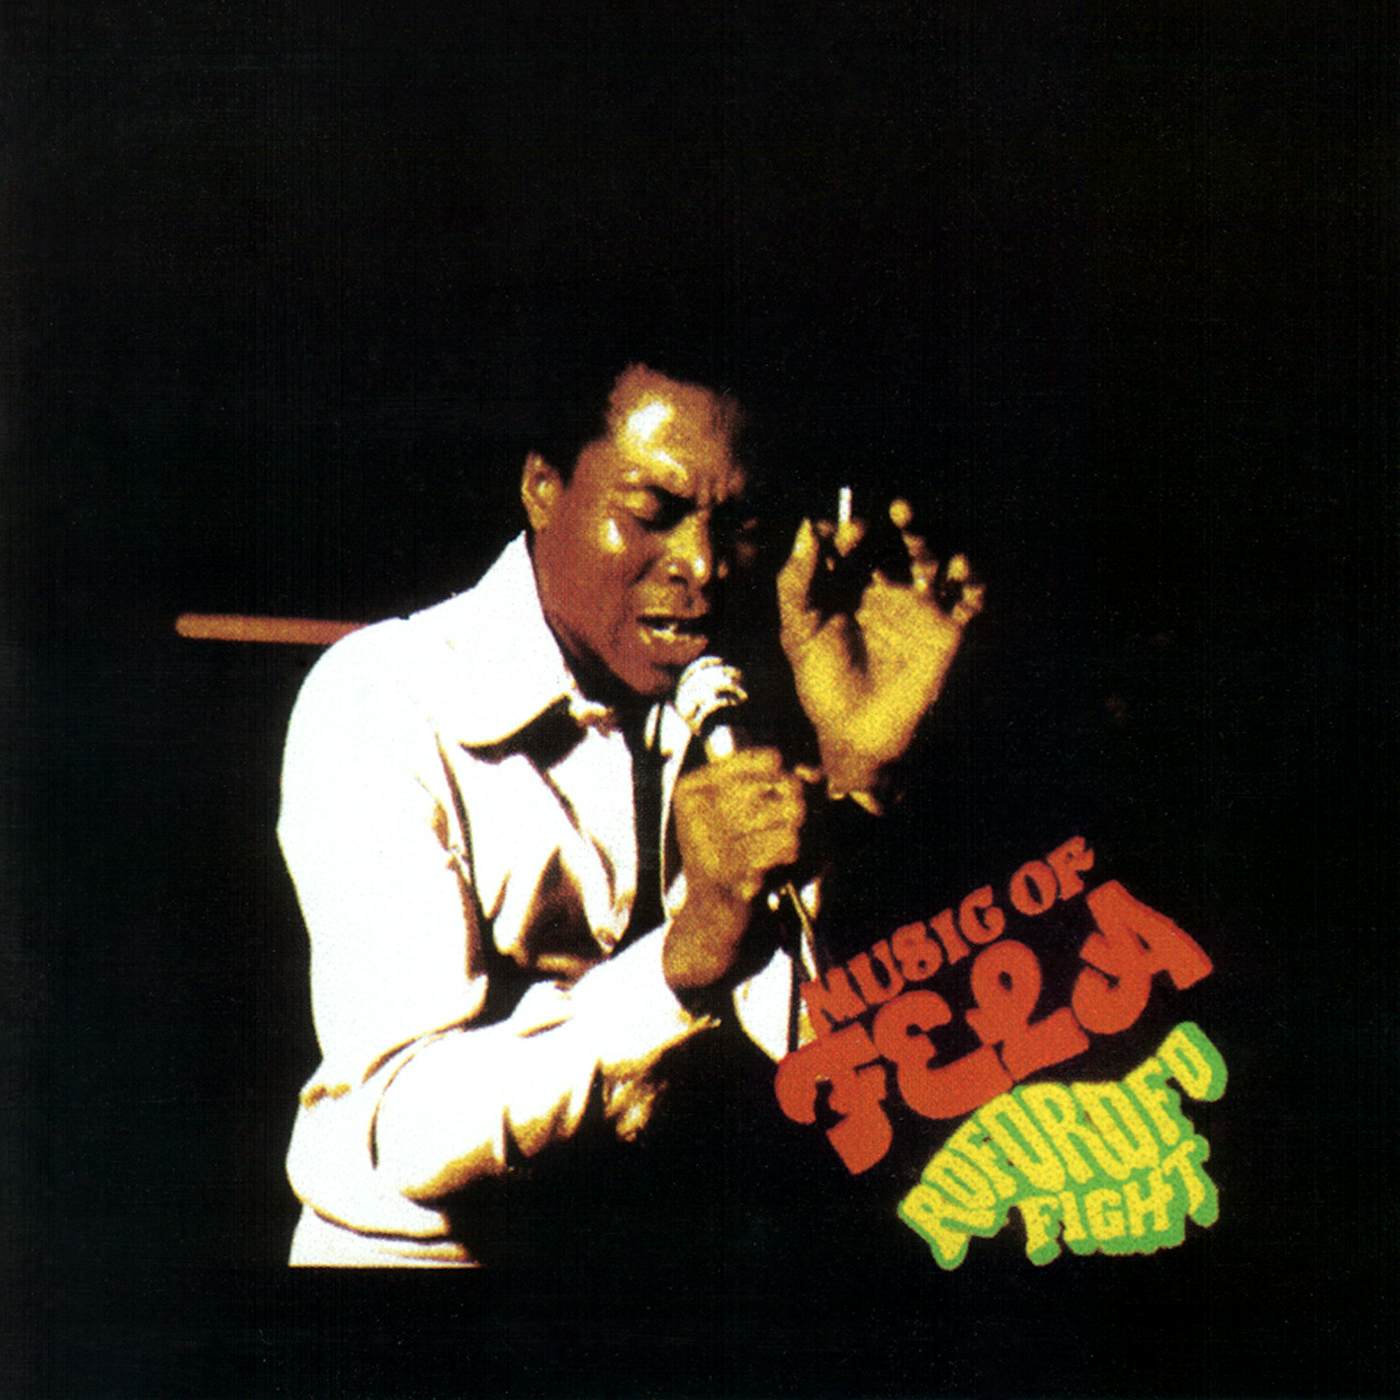 Fela Kuti Roforofo Fight Vinyl Record